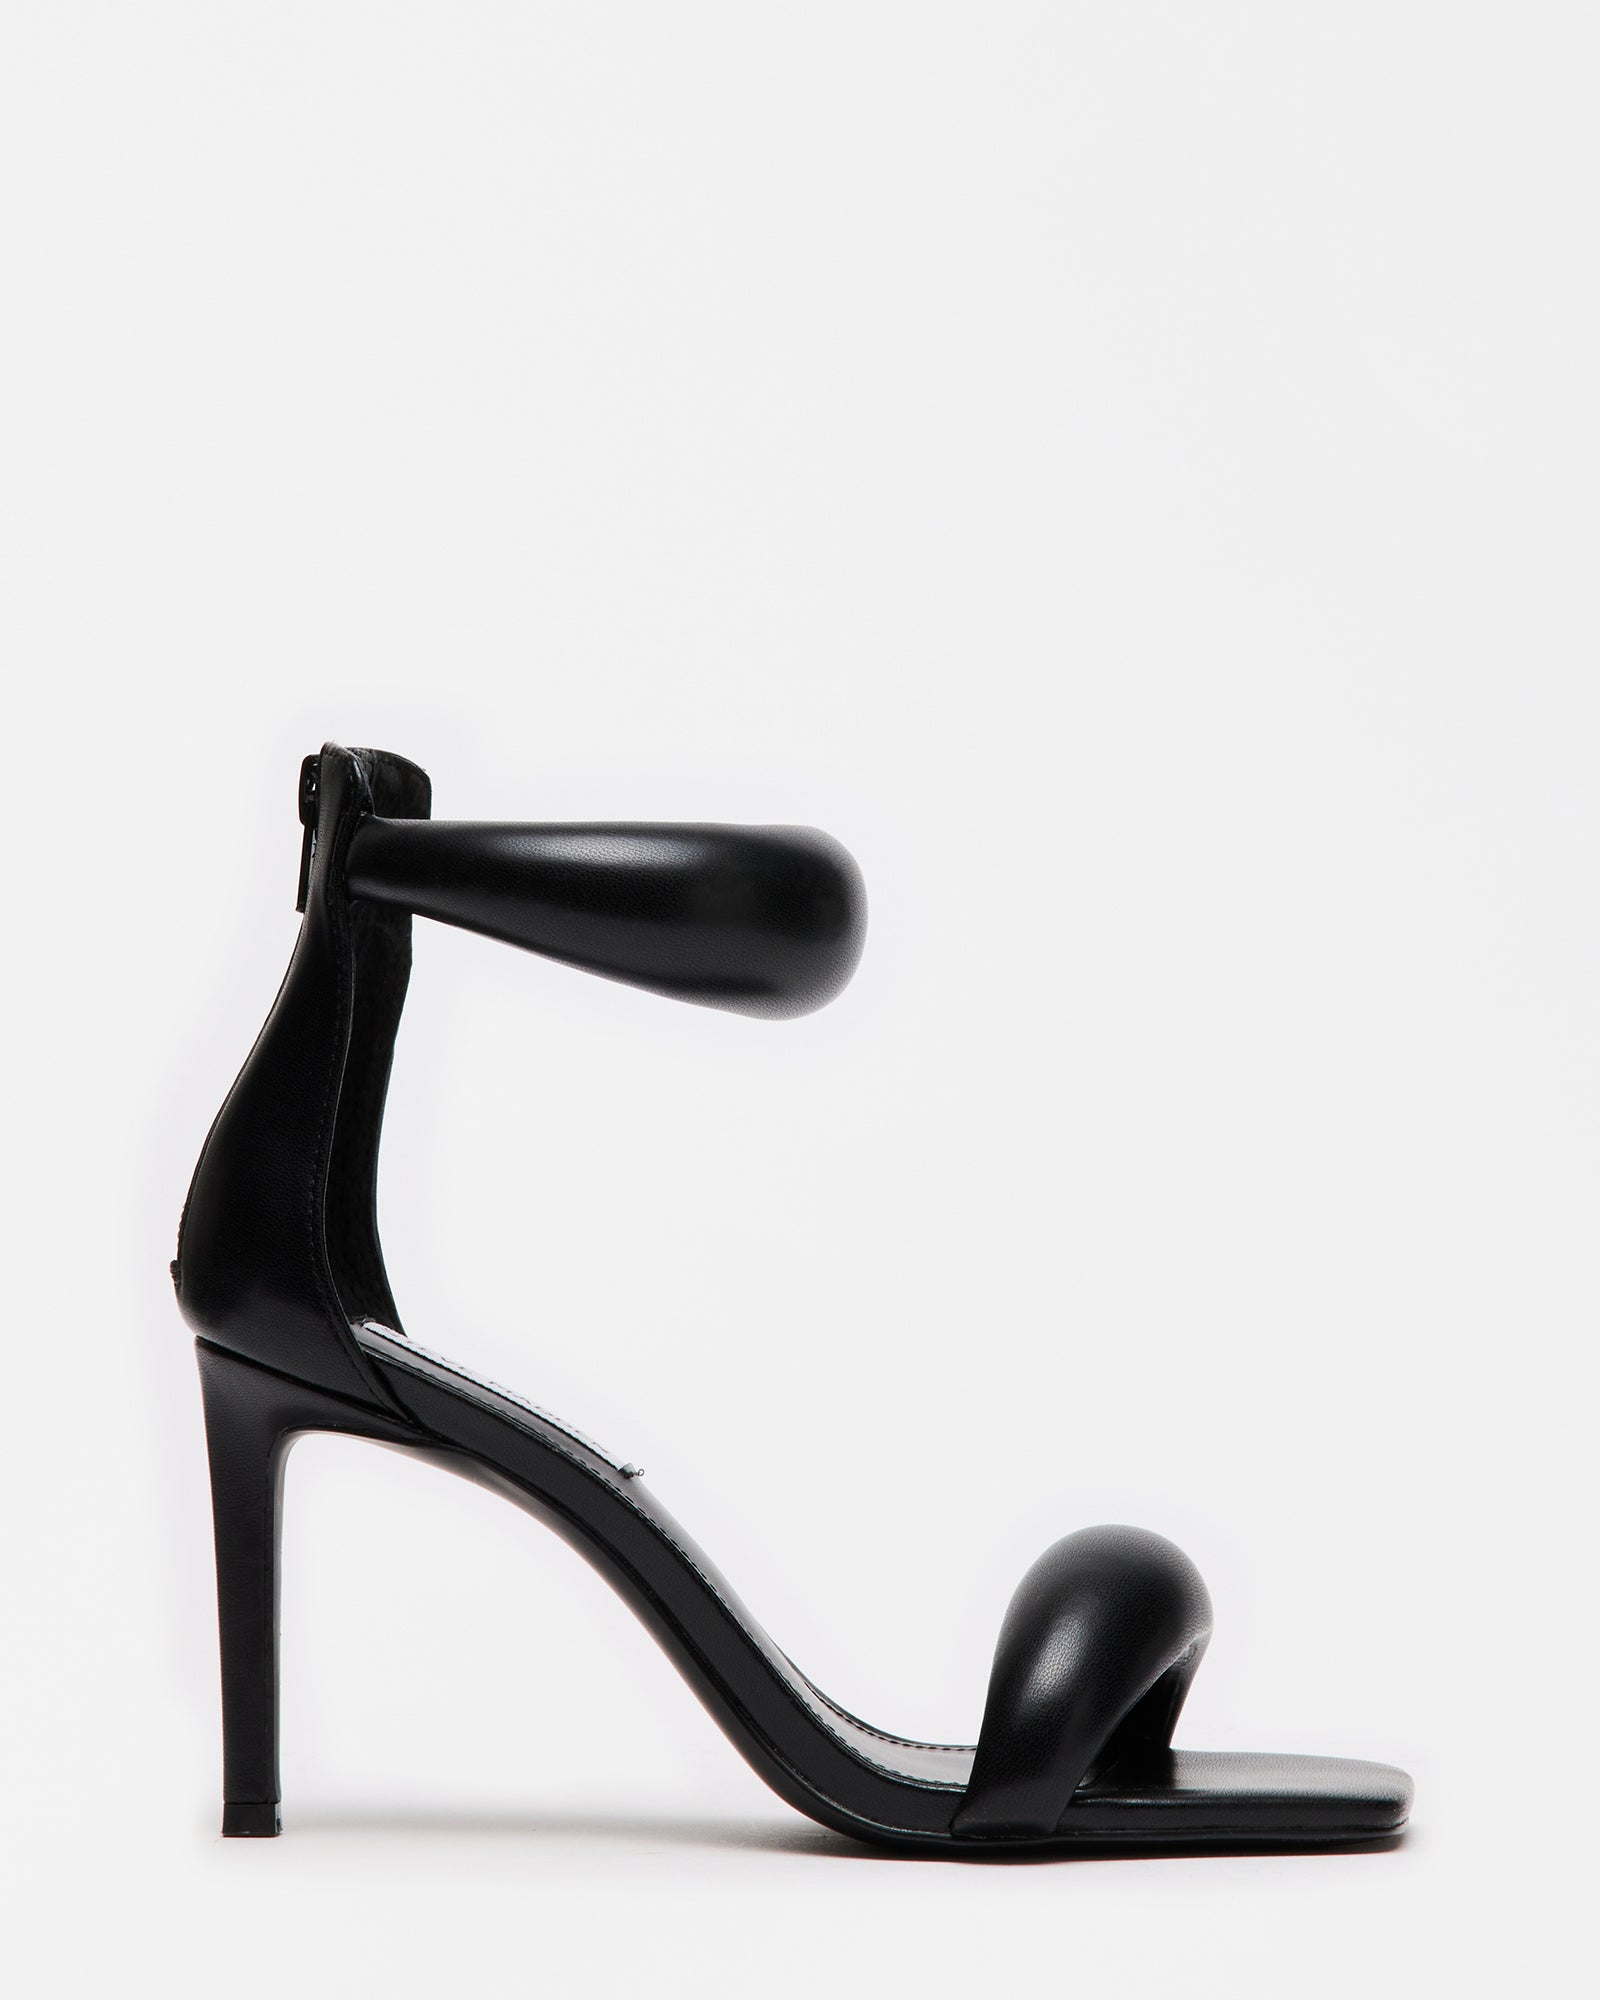 PARTAY Black Square Toe Heel | Women's Heels – Steve Madden